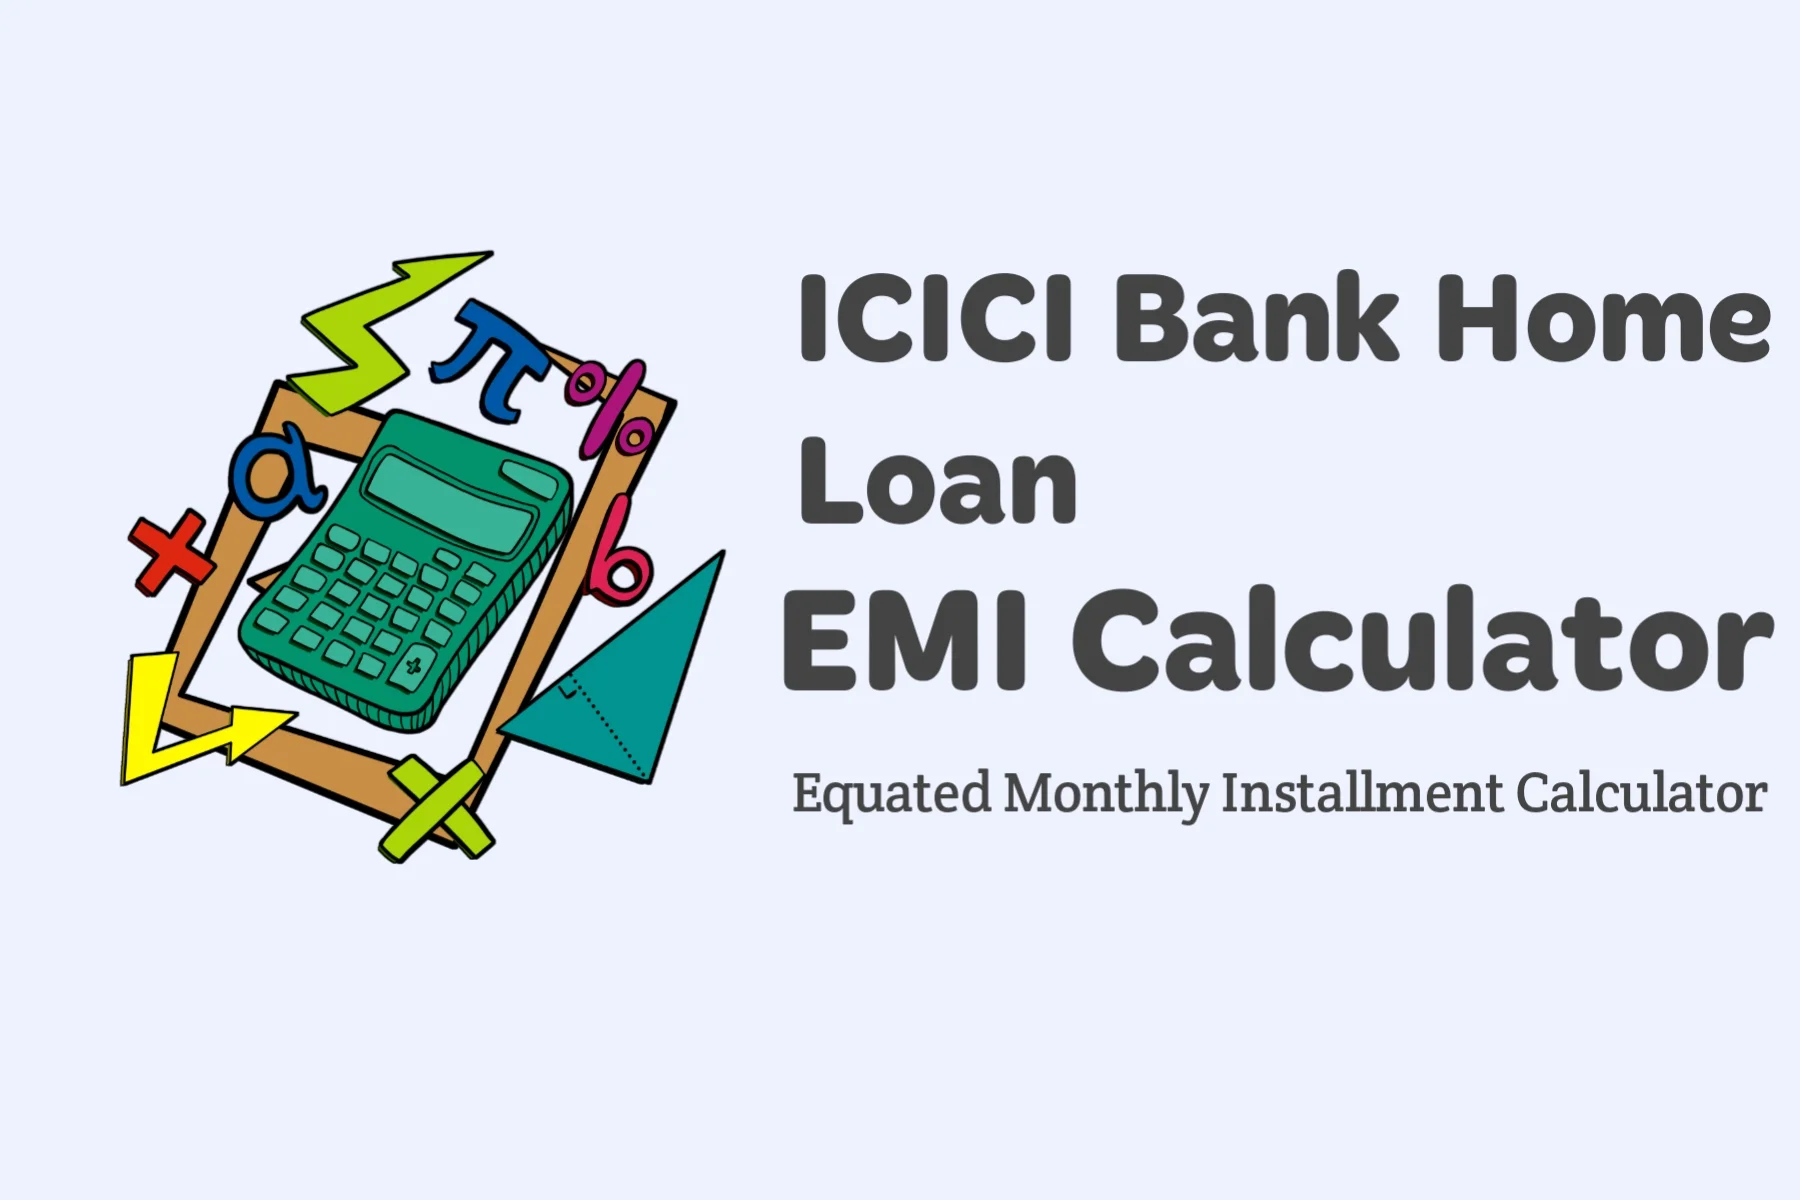 ICICI Bank Home Loan EMI Calculator